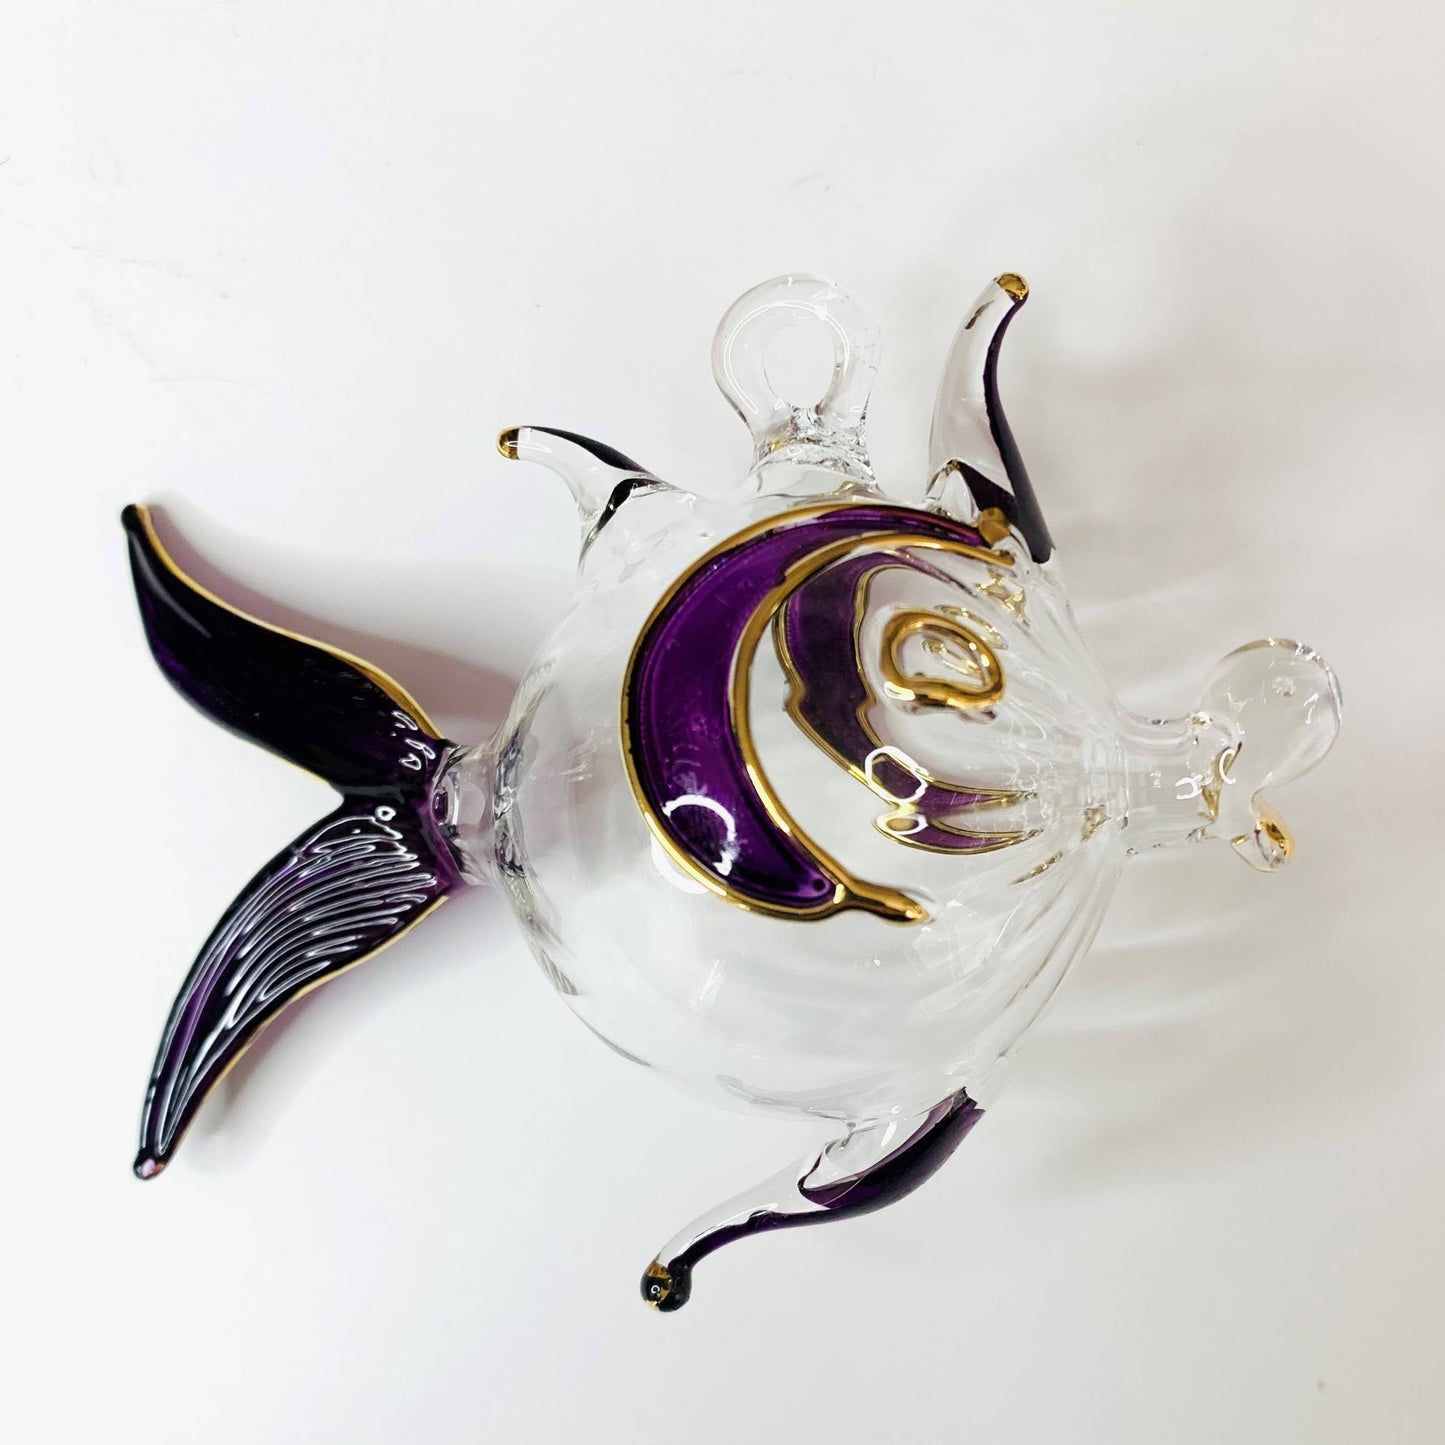 Blown Glass Ornament - Balloon Fish